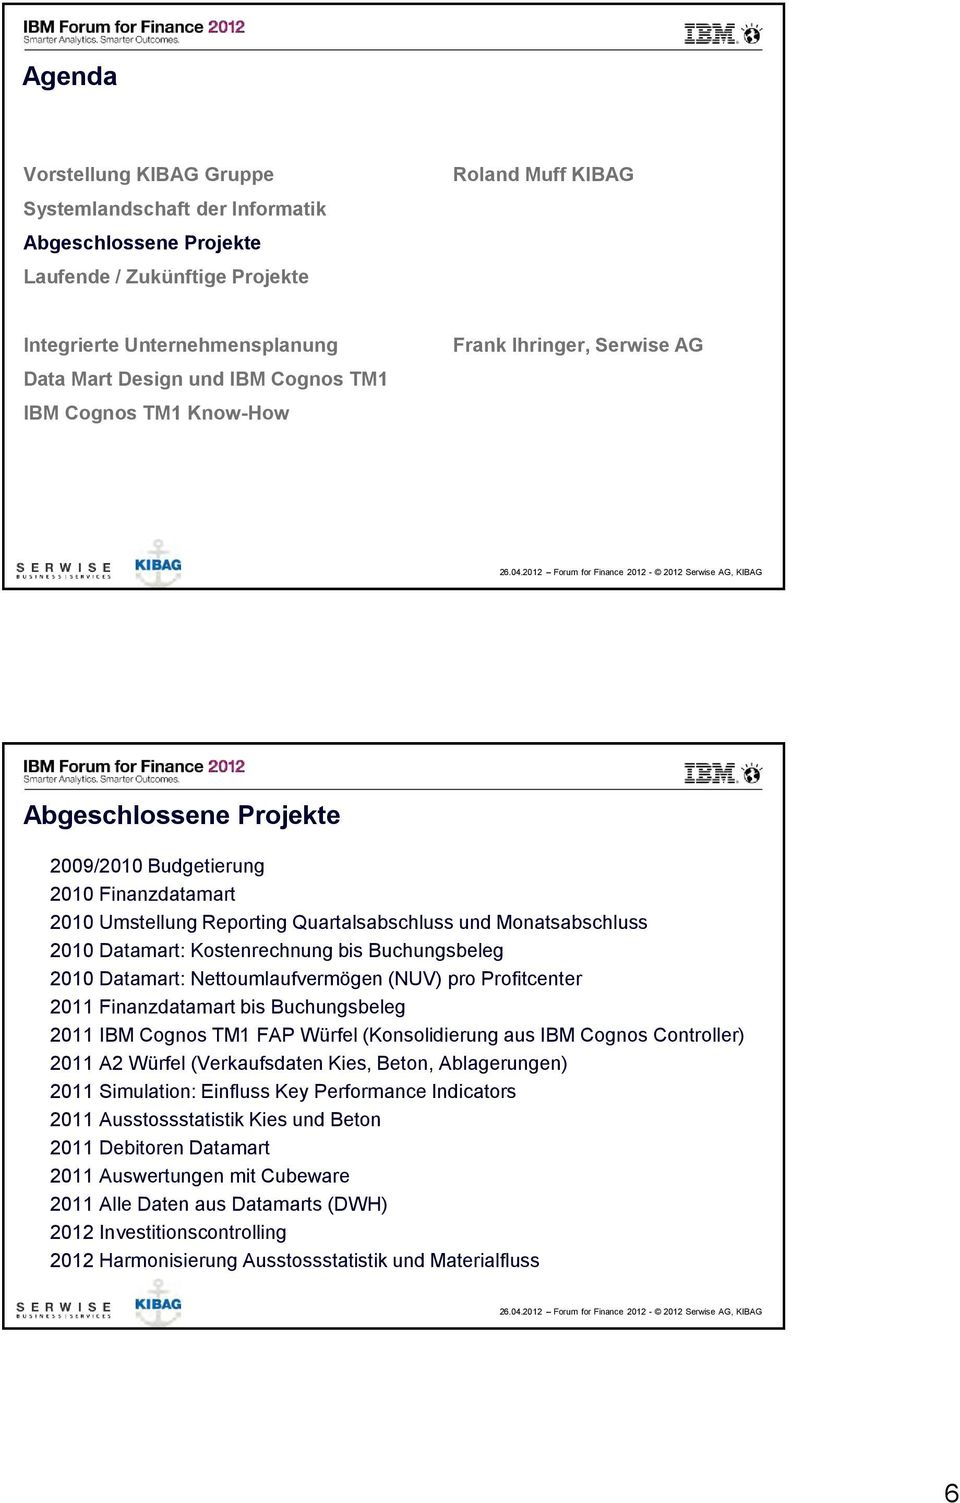 Buchungsbeleg 2010 Datamart: Nettoumlaufvermögen (NUV) pro Profitcenter 2011 Finanzdatamart bis Buchungsbeleg 2011 IBM Cognos TM1 FAP Würfel (Konsolidierung aus IBM Cognos Controller) 2011 A2 Würfel